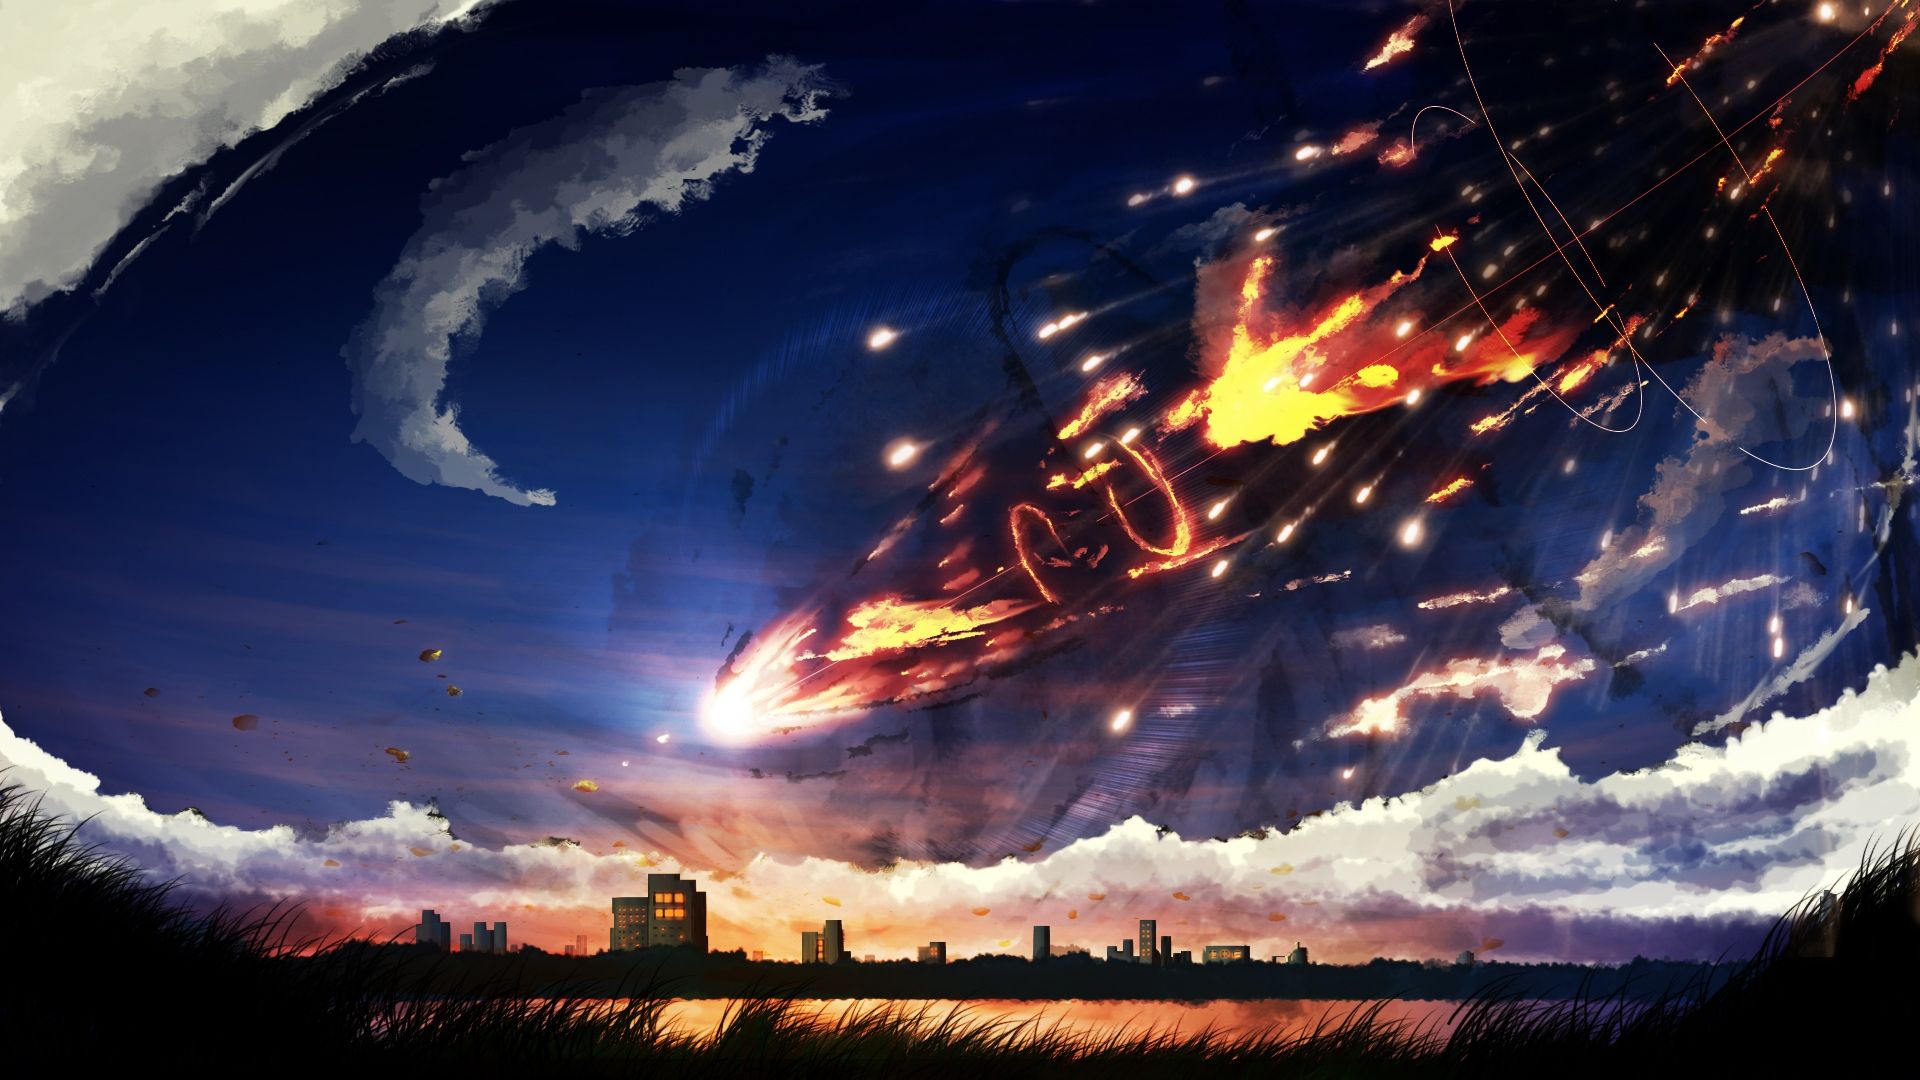 Download 1920x1080 Anime Landscape, Meteor, Clouds, Buildings, Sky